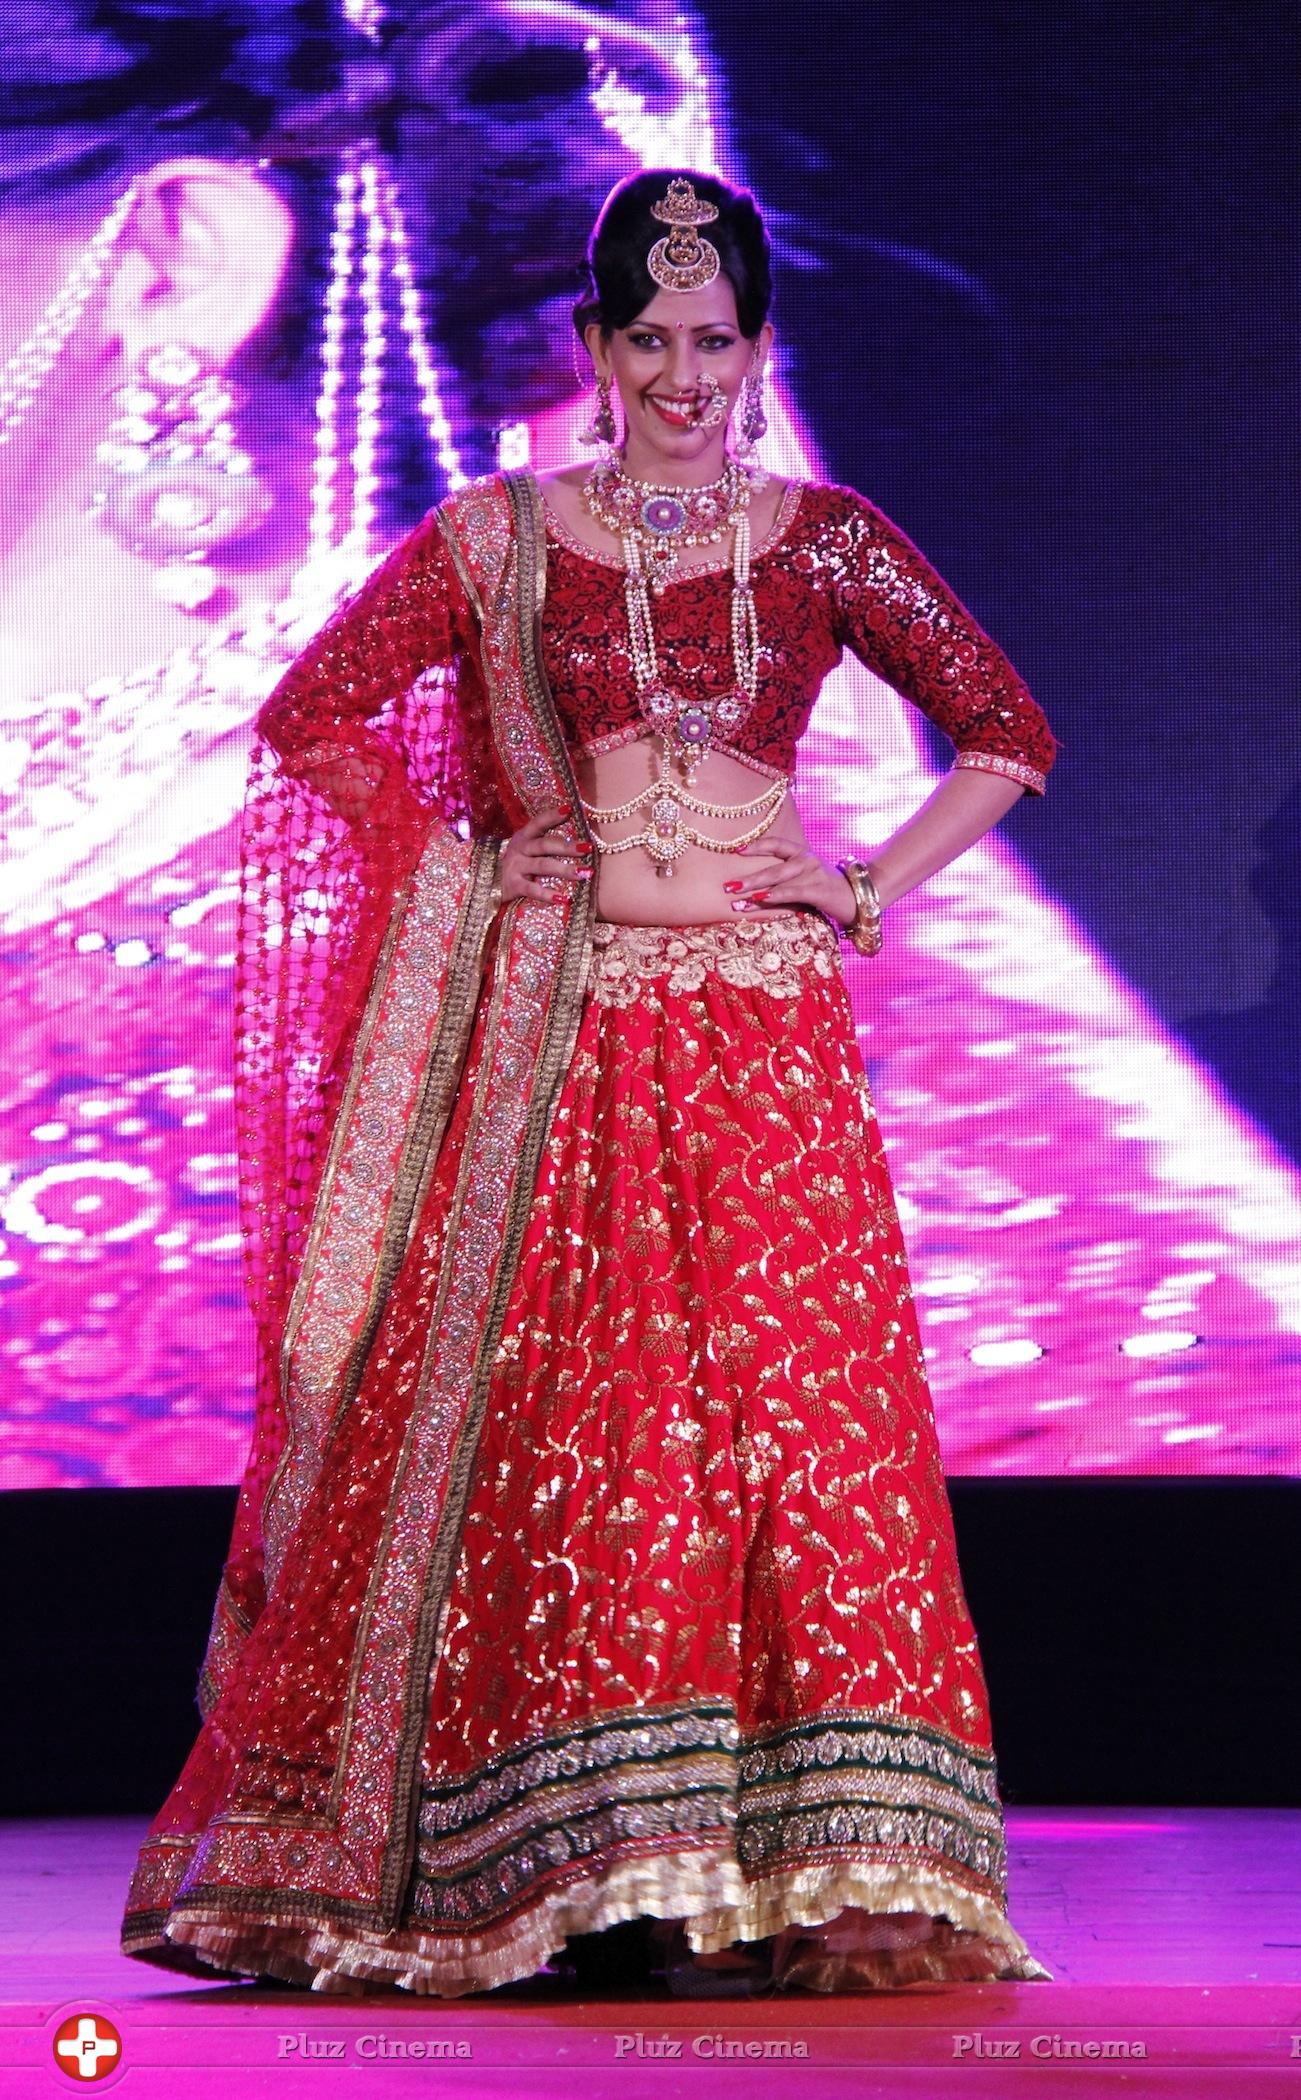 Sanjana Singh walks for Makeup Mantra fashion show photos | Picture 1007426